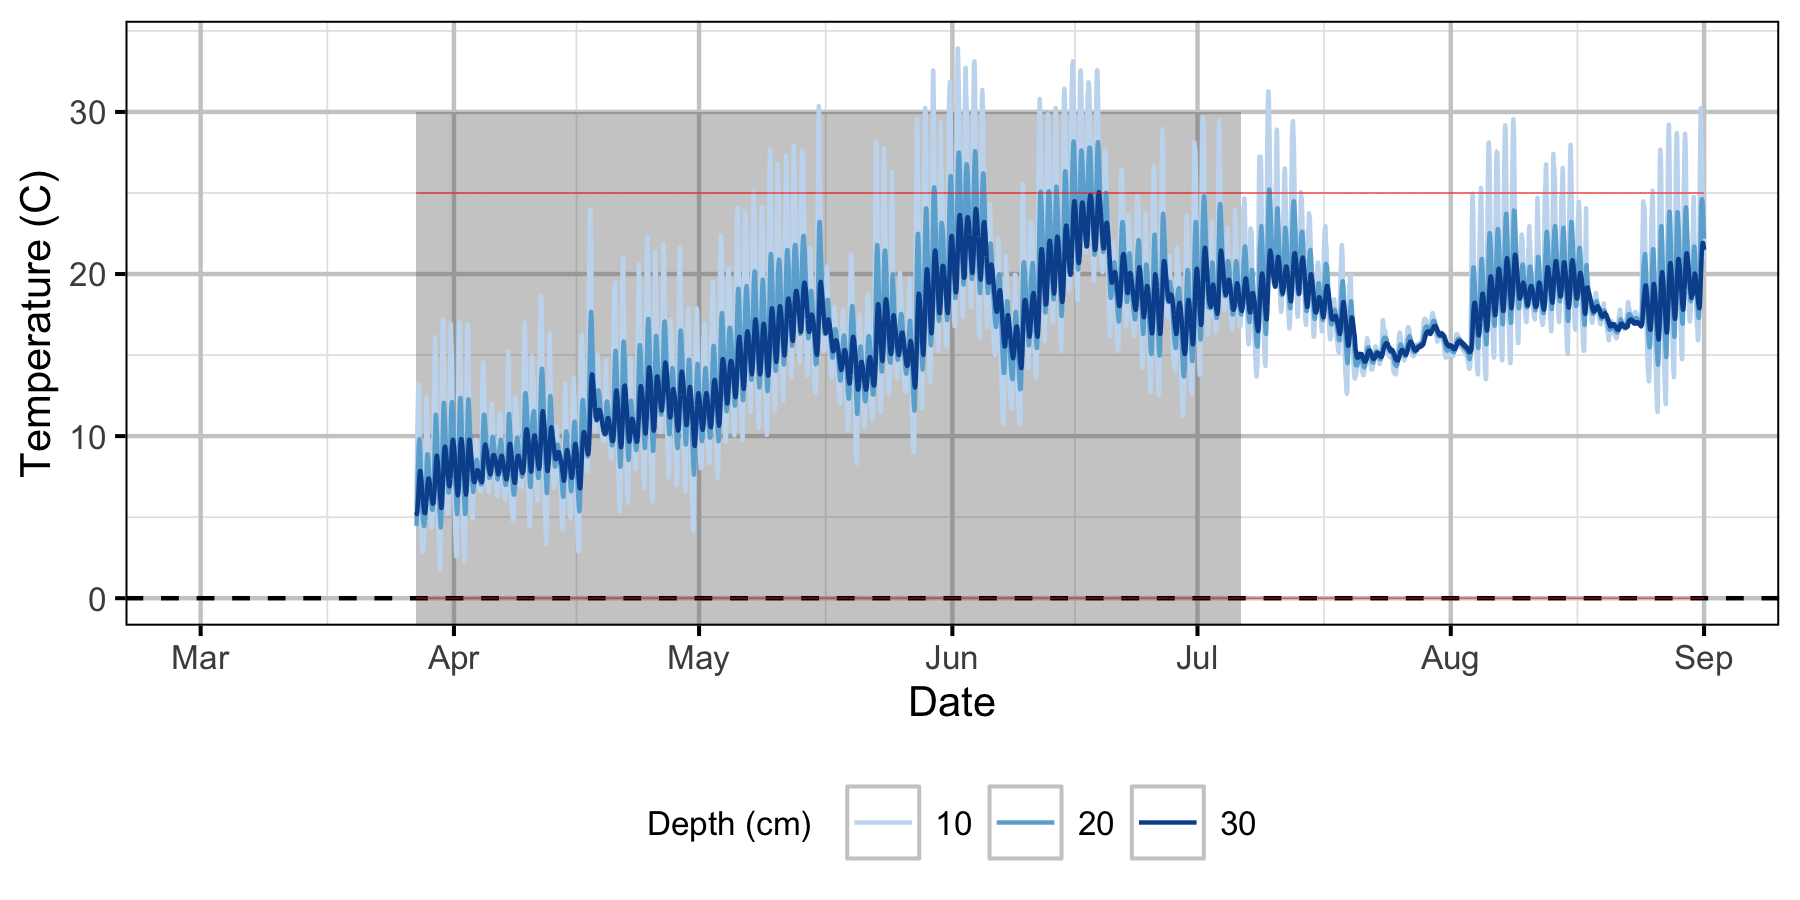 figures/Sensor Data/Absolute Gravel Temperature Stations/Norns Creek Fan/Station08.png